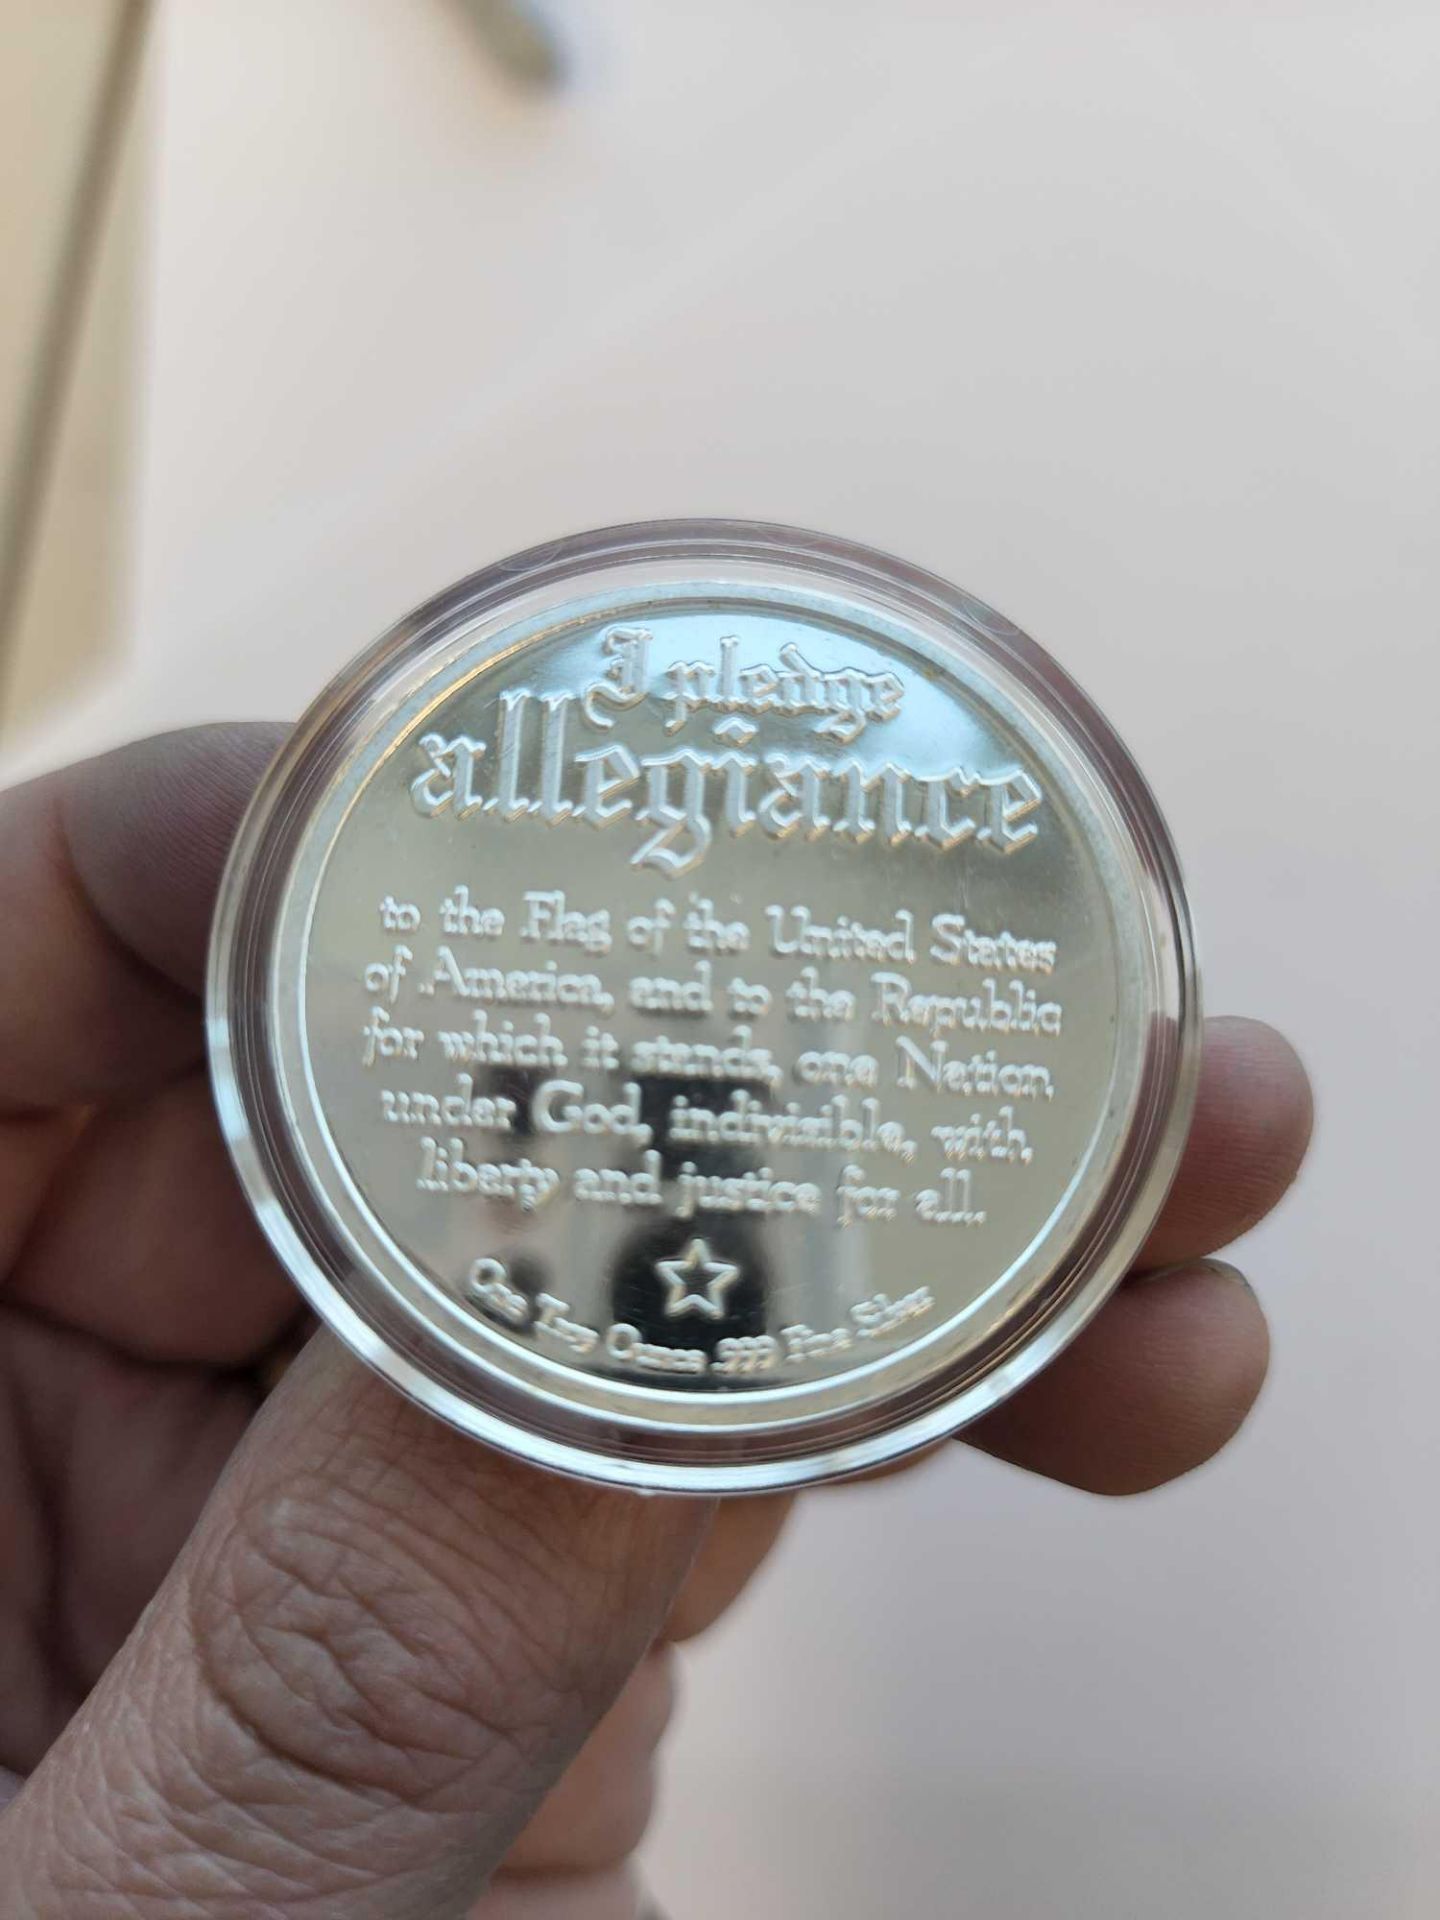 2 oz Pledge of Allegiance Coins - Image 3 of 3